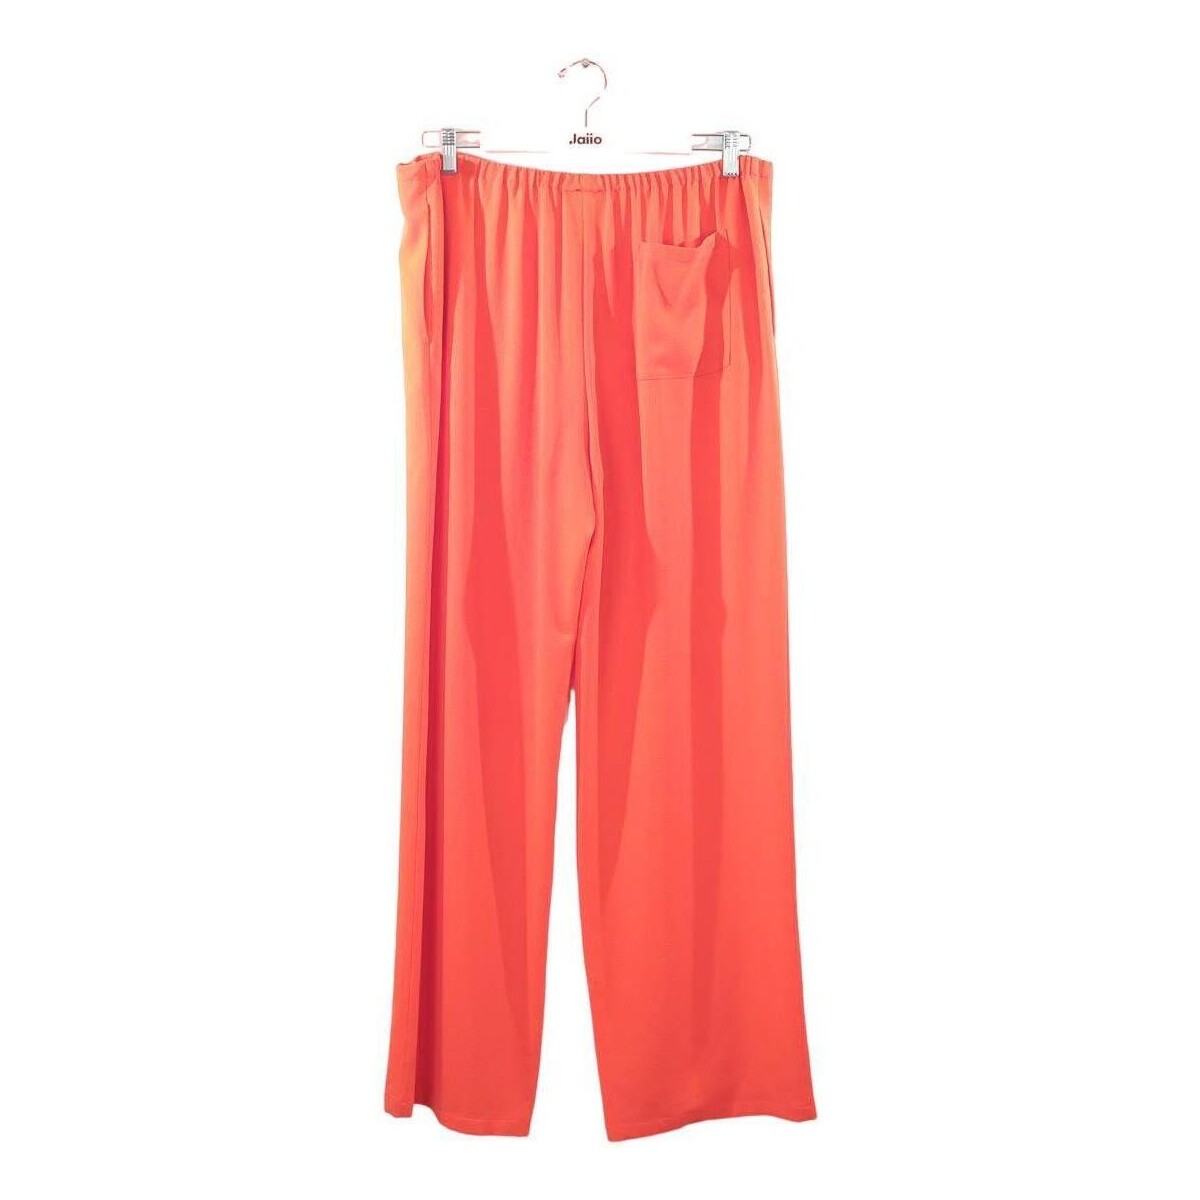 Vêtements Femme Pantalons Agnes B Pantalon orange Orange